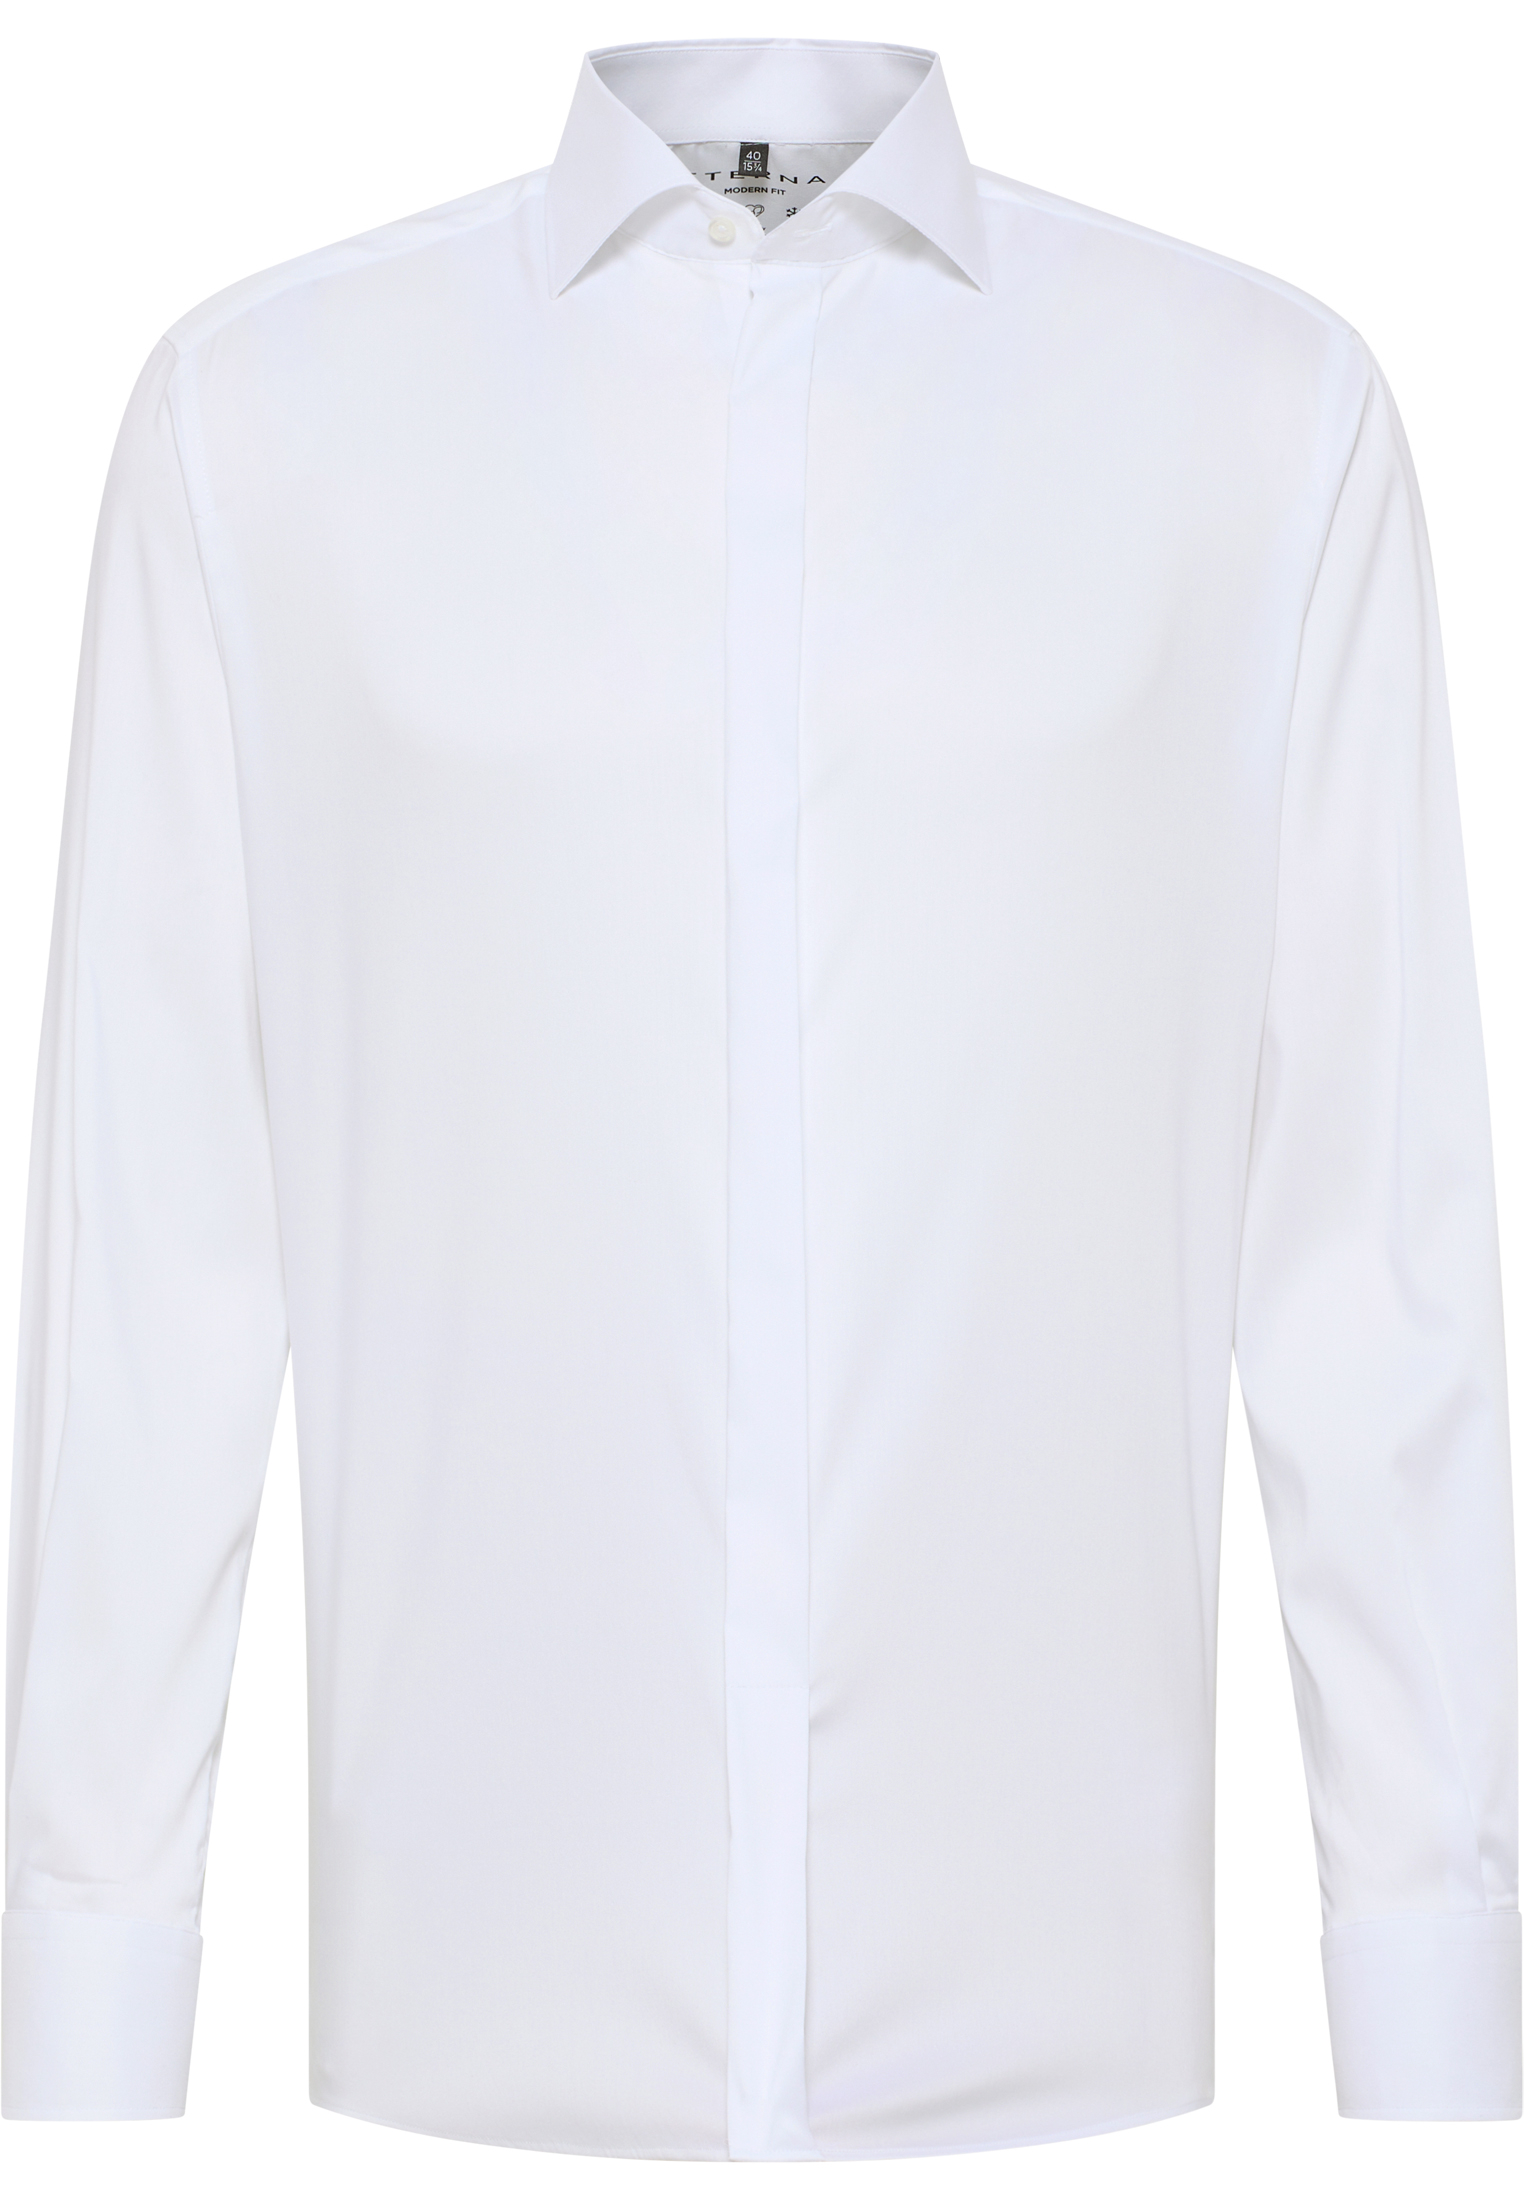 Performance Langarm | | MODERN | 1SH11237-00-01-40-1/1 weiß 40 unifarben Shirt | FIT in weiß